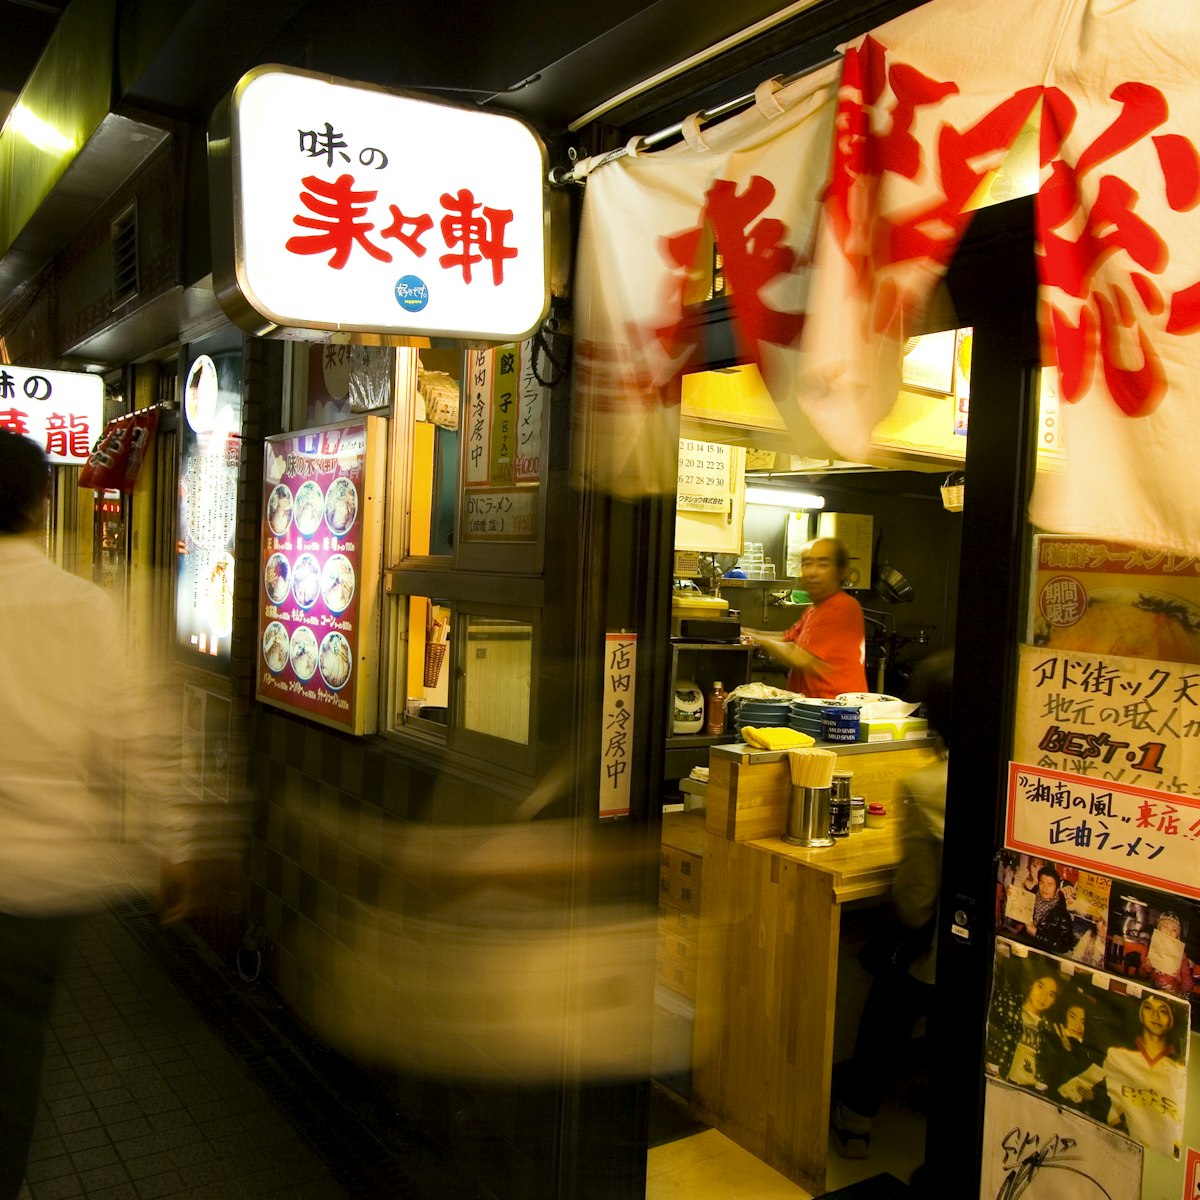 Ramen Yokocho lined with tiny restaurants serving ramen noodle soup.